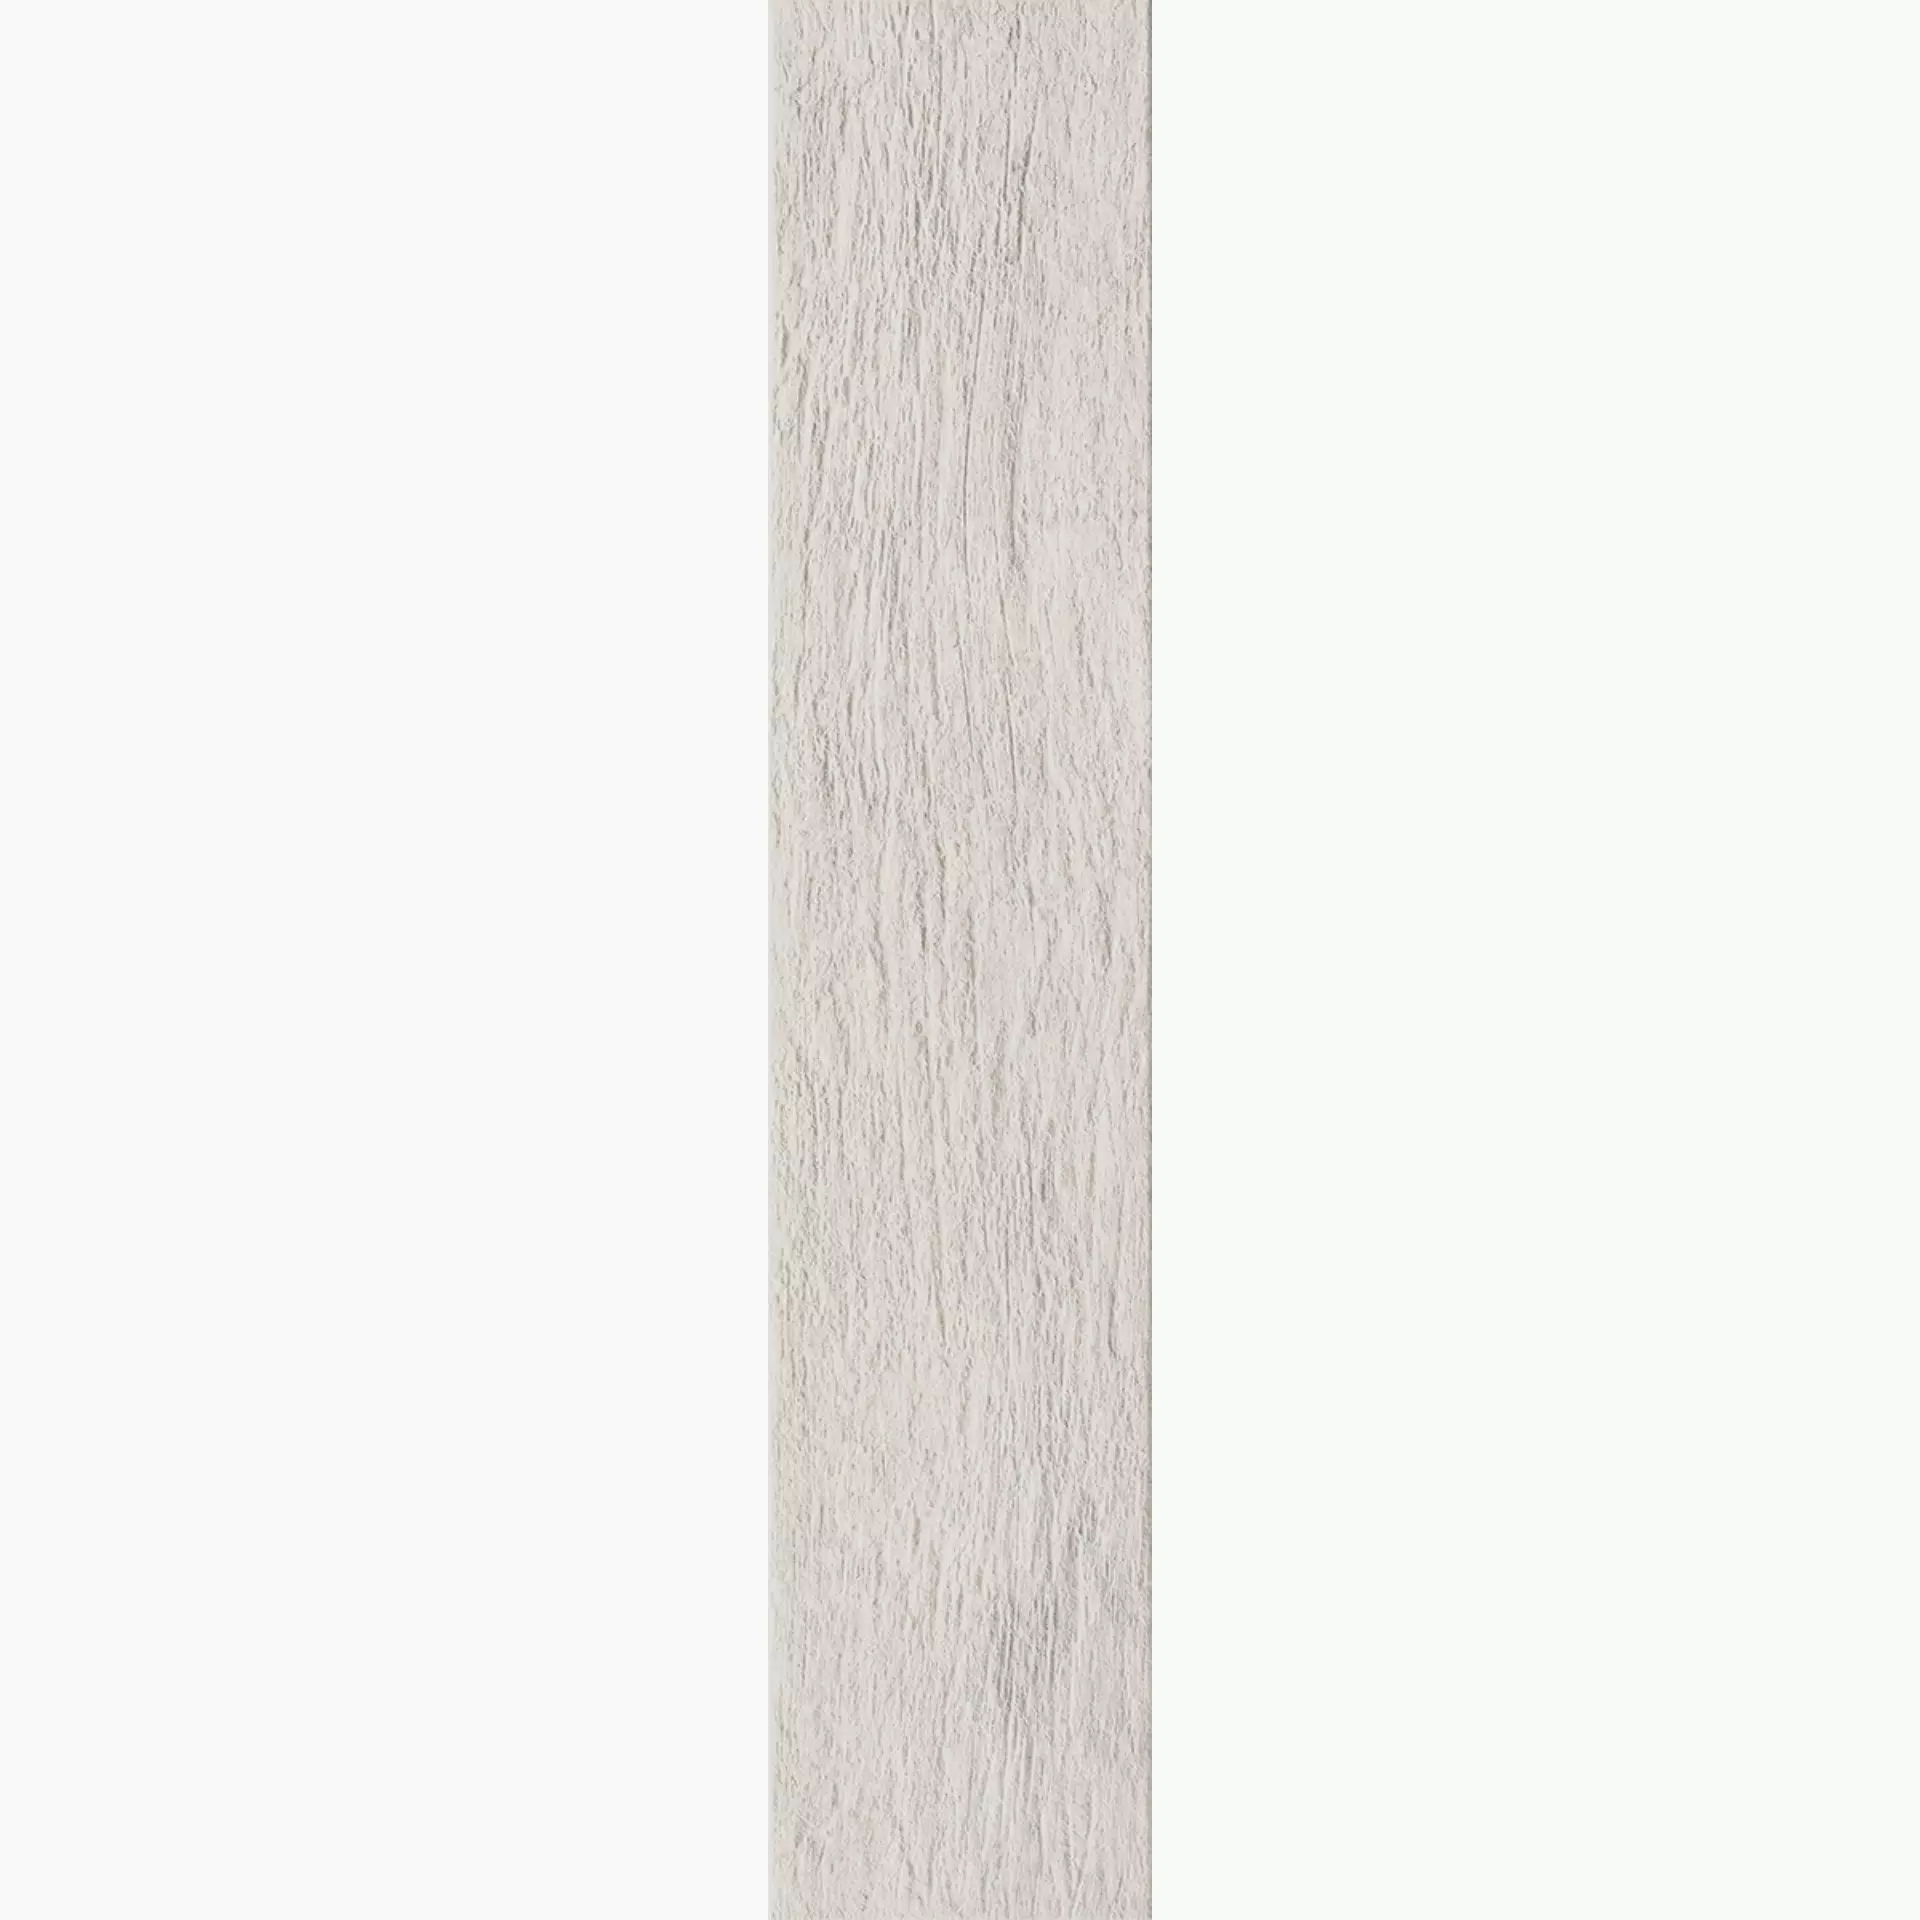 Rondine Greenwood Bianco Strong J86707 24x120cm 9,5mm